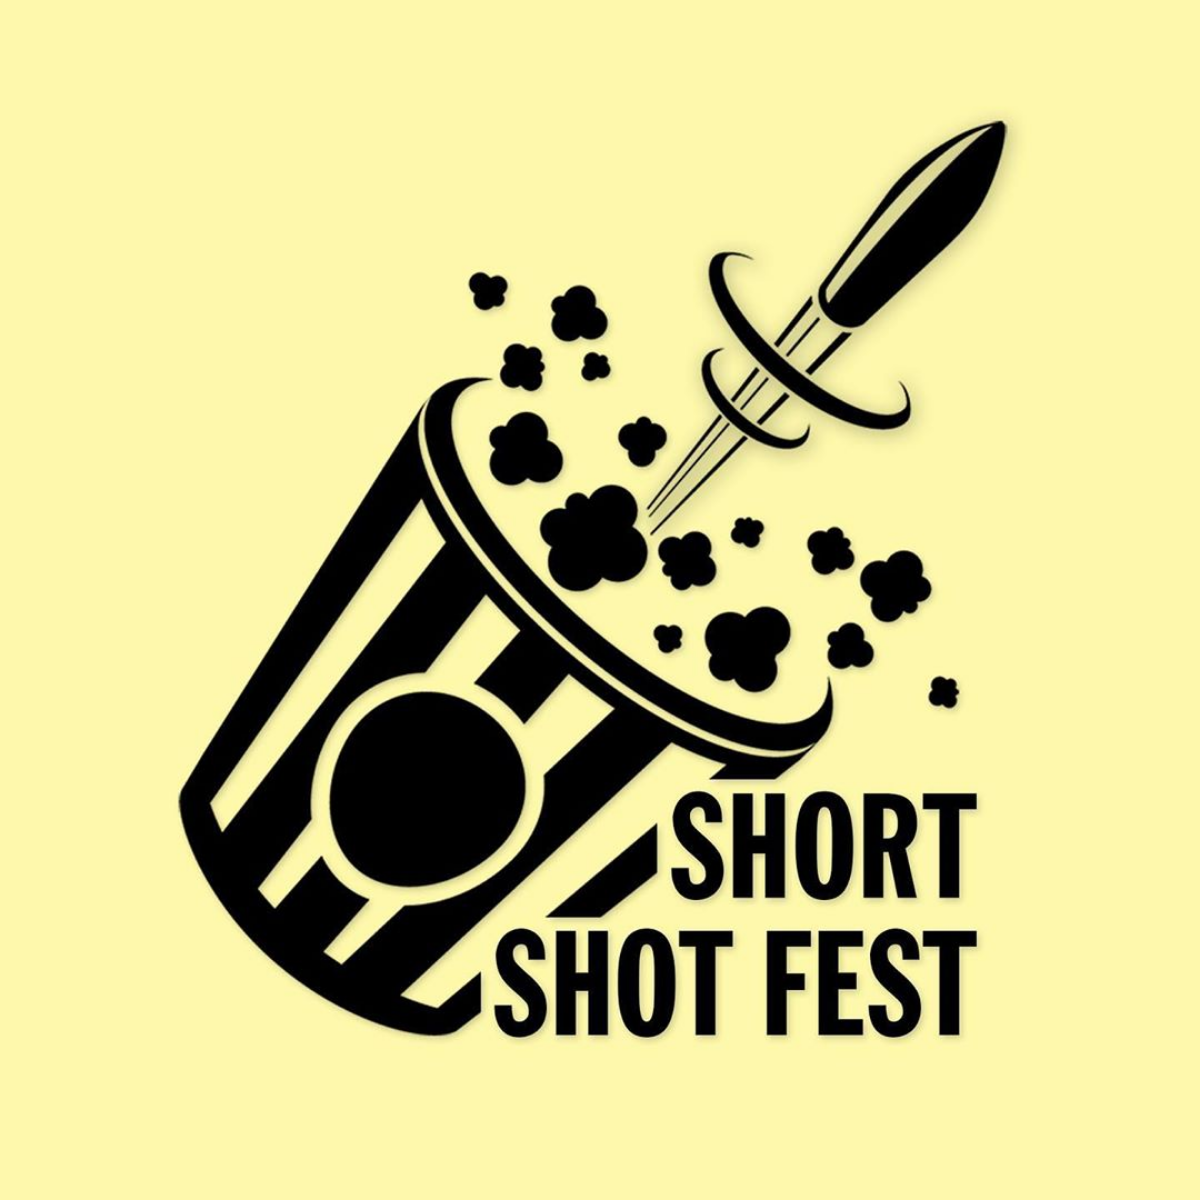 Screenshot_2020-09-07 Short Shot Fest ( shortshotfest) • Instagram photos and videos.png